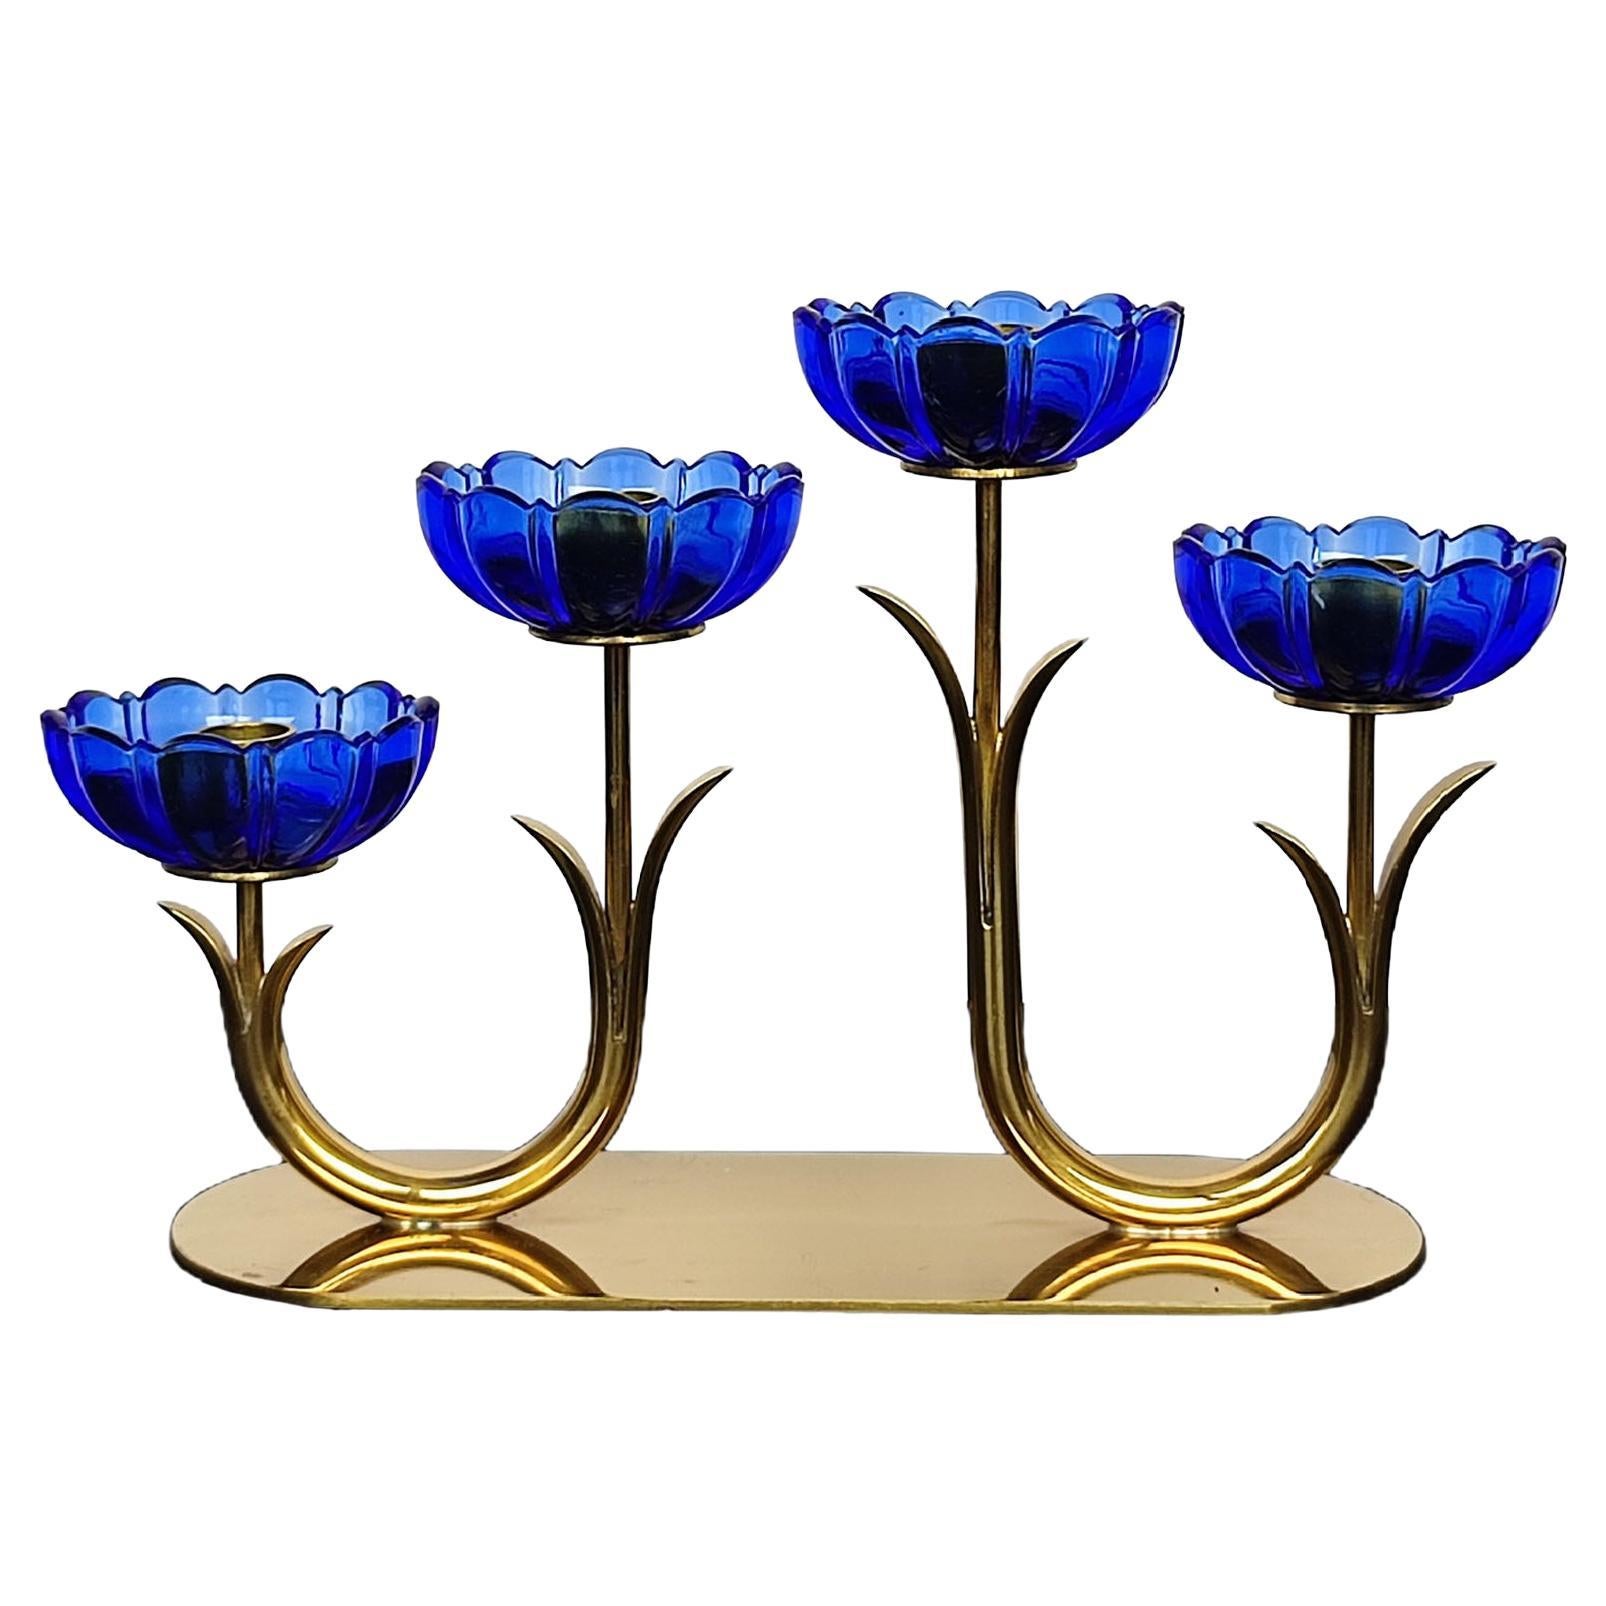 Gunnar Ander pour Ystad Metall, chandelier en laiton et verre d'art bleu